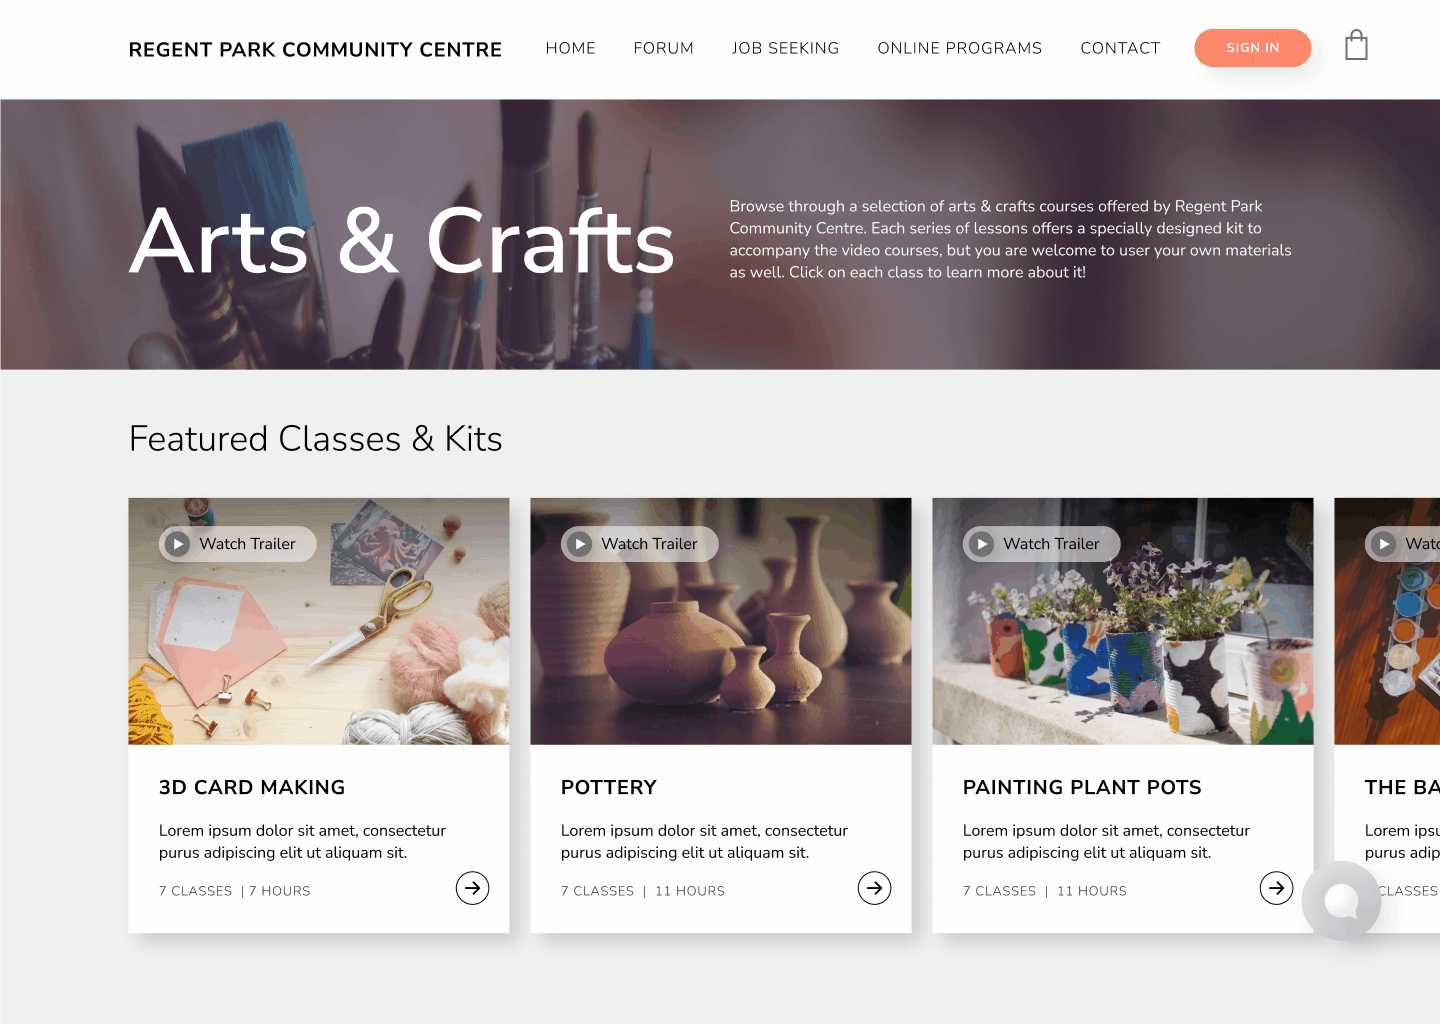 Gif of arts & crafts kit purchasing process